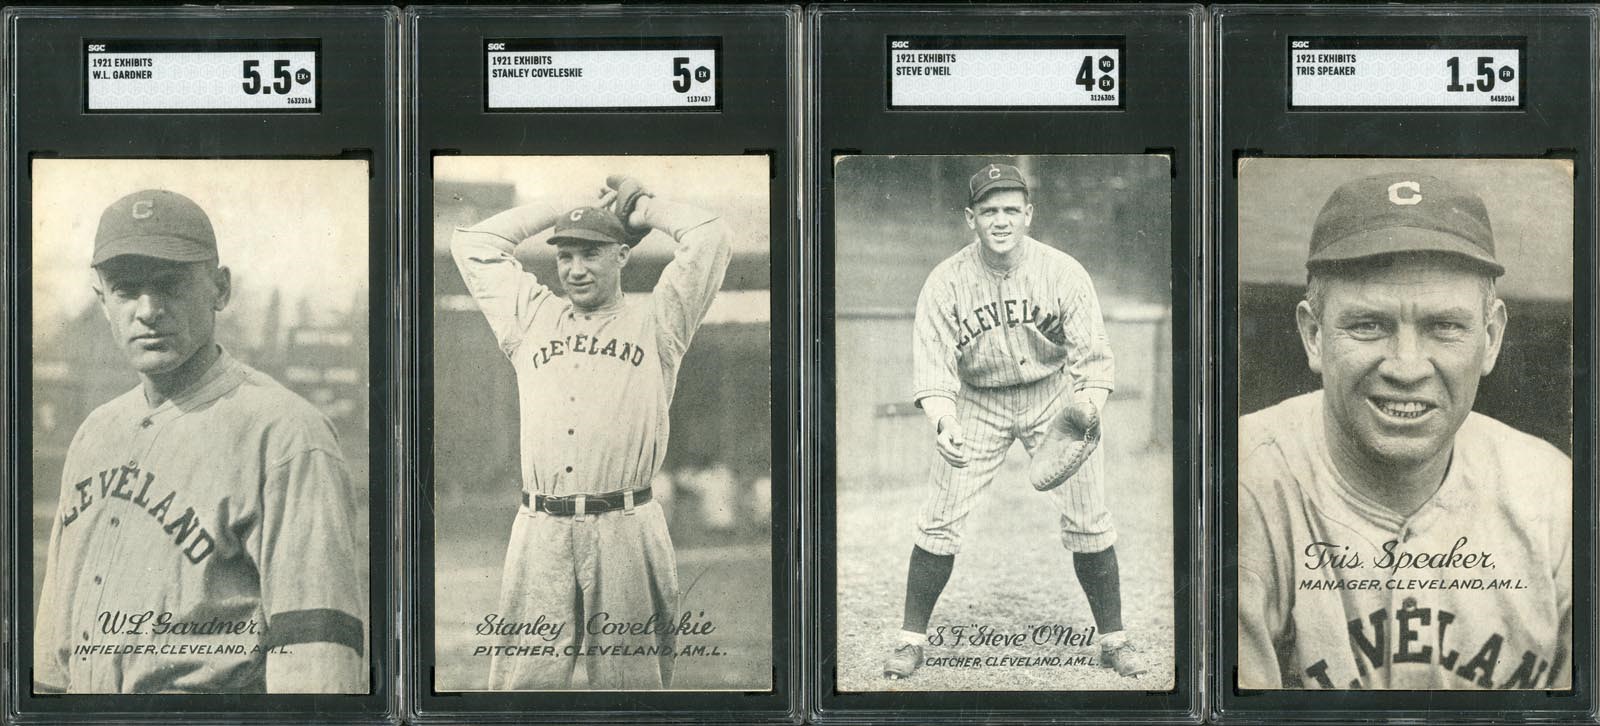 1921 Cleveland Indians Exhibit Card Collection (SGC)